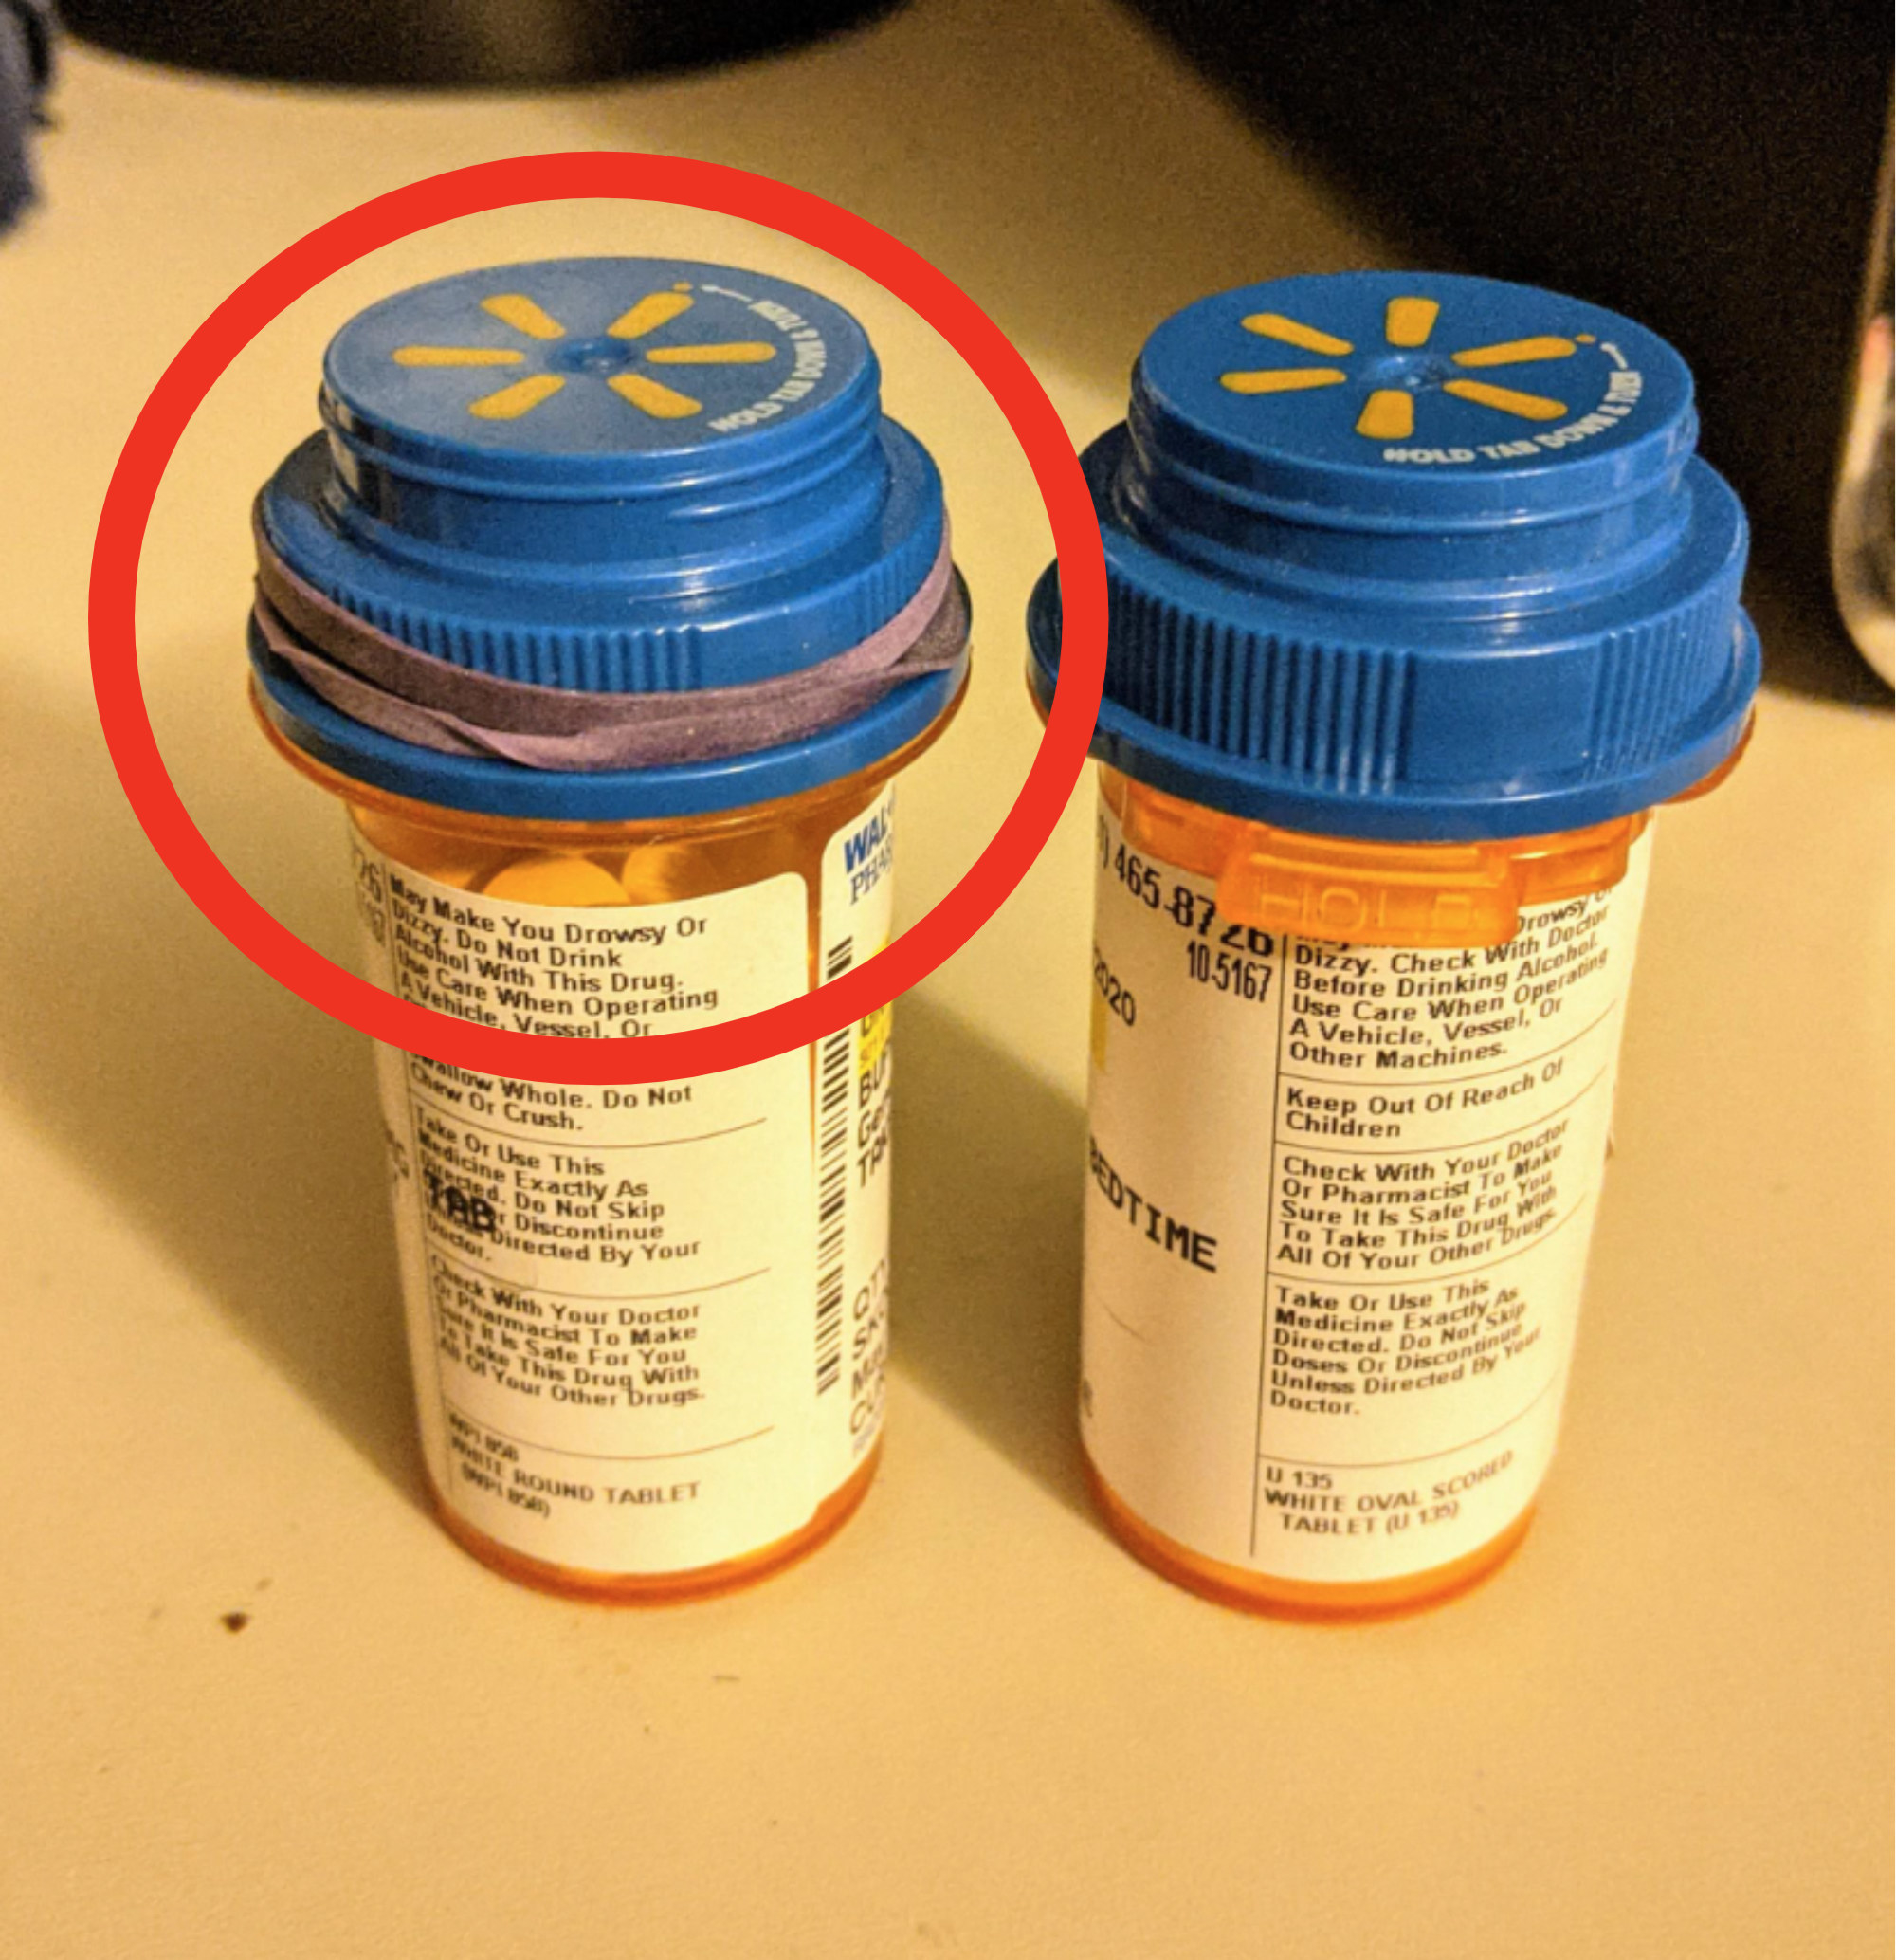 rubber band over a pill bottle